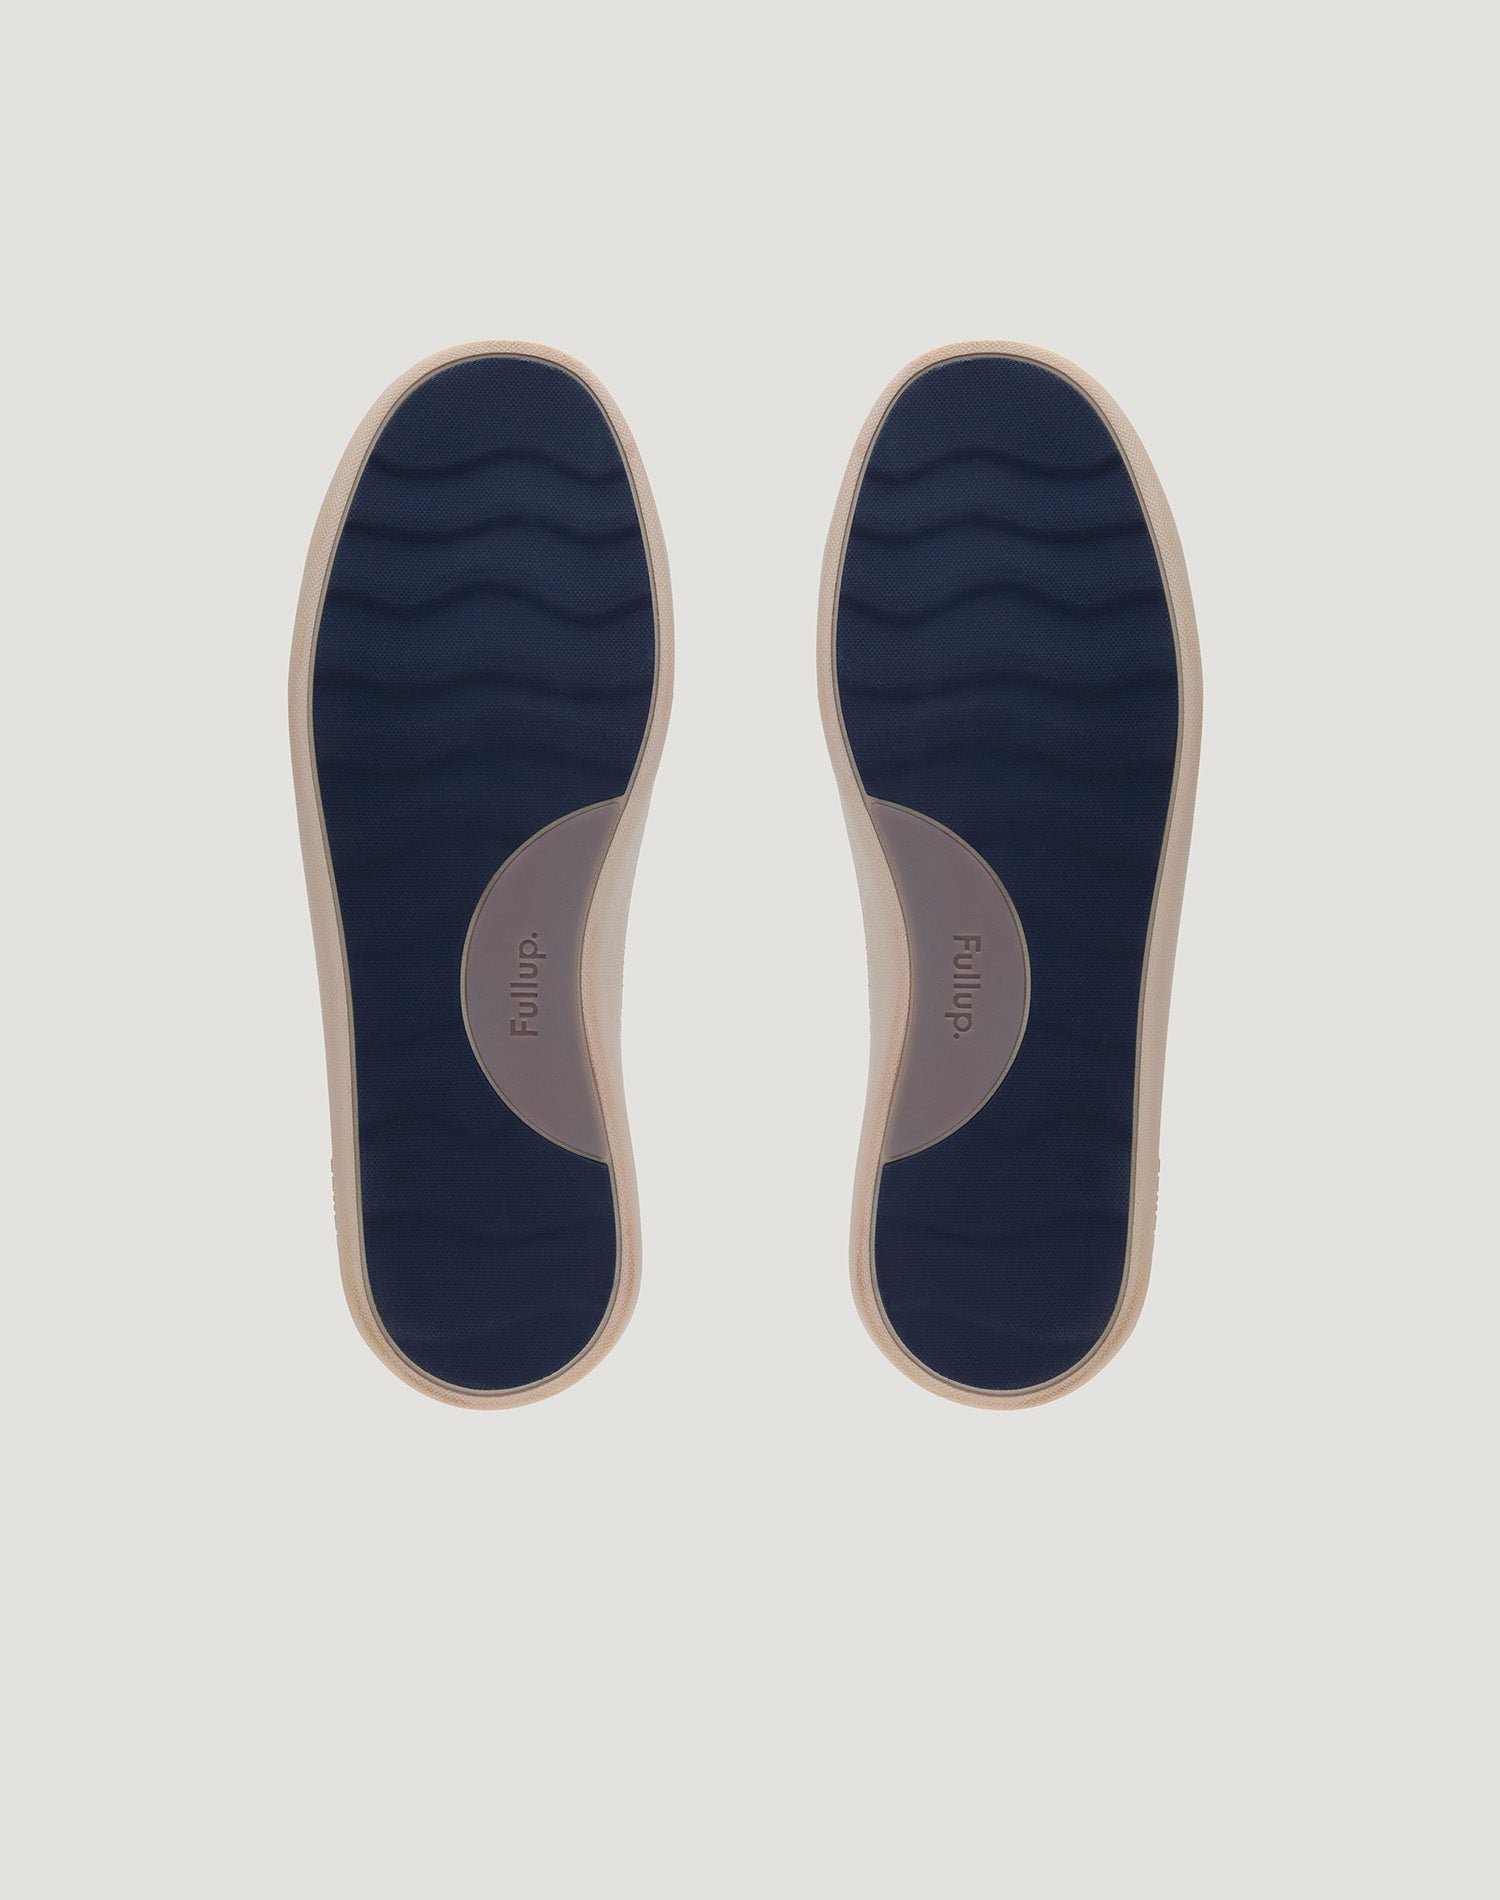 Infinity Deep Sea Coral - Navy Blue Knit Sneaker